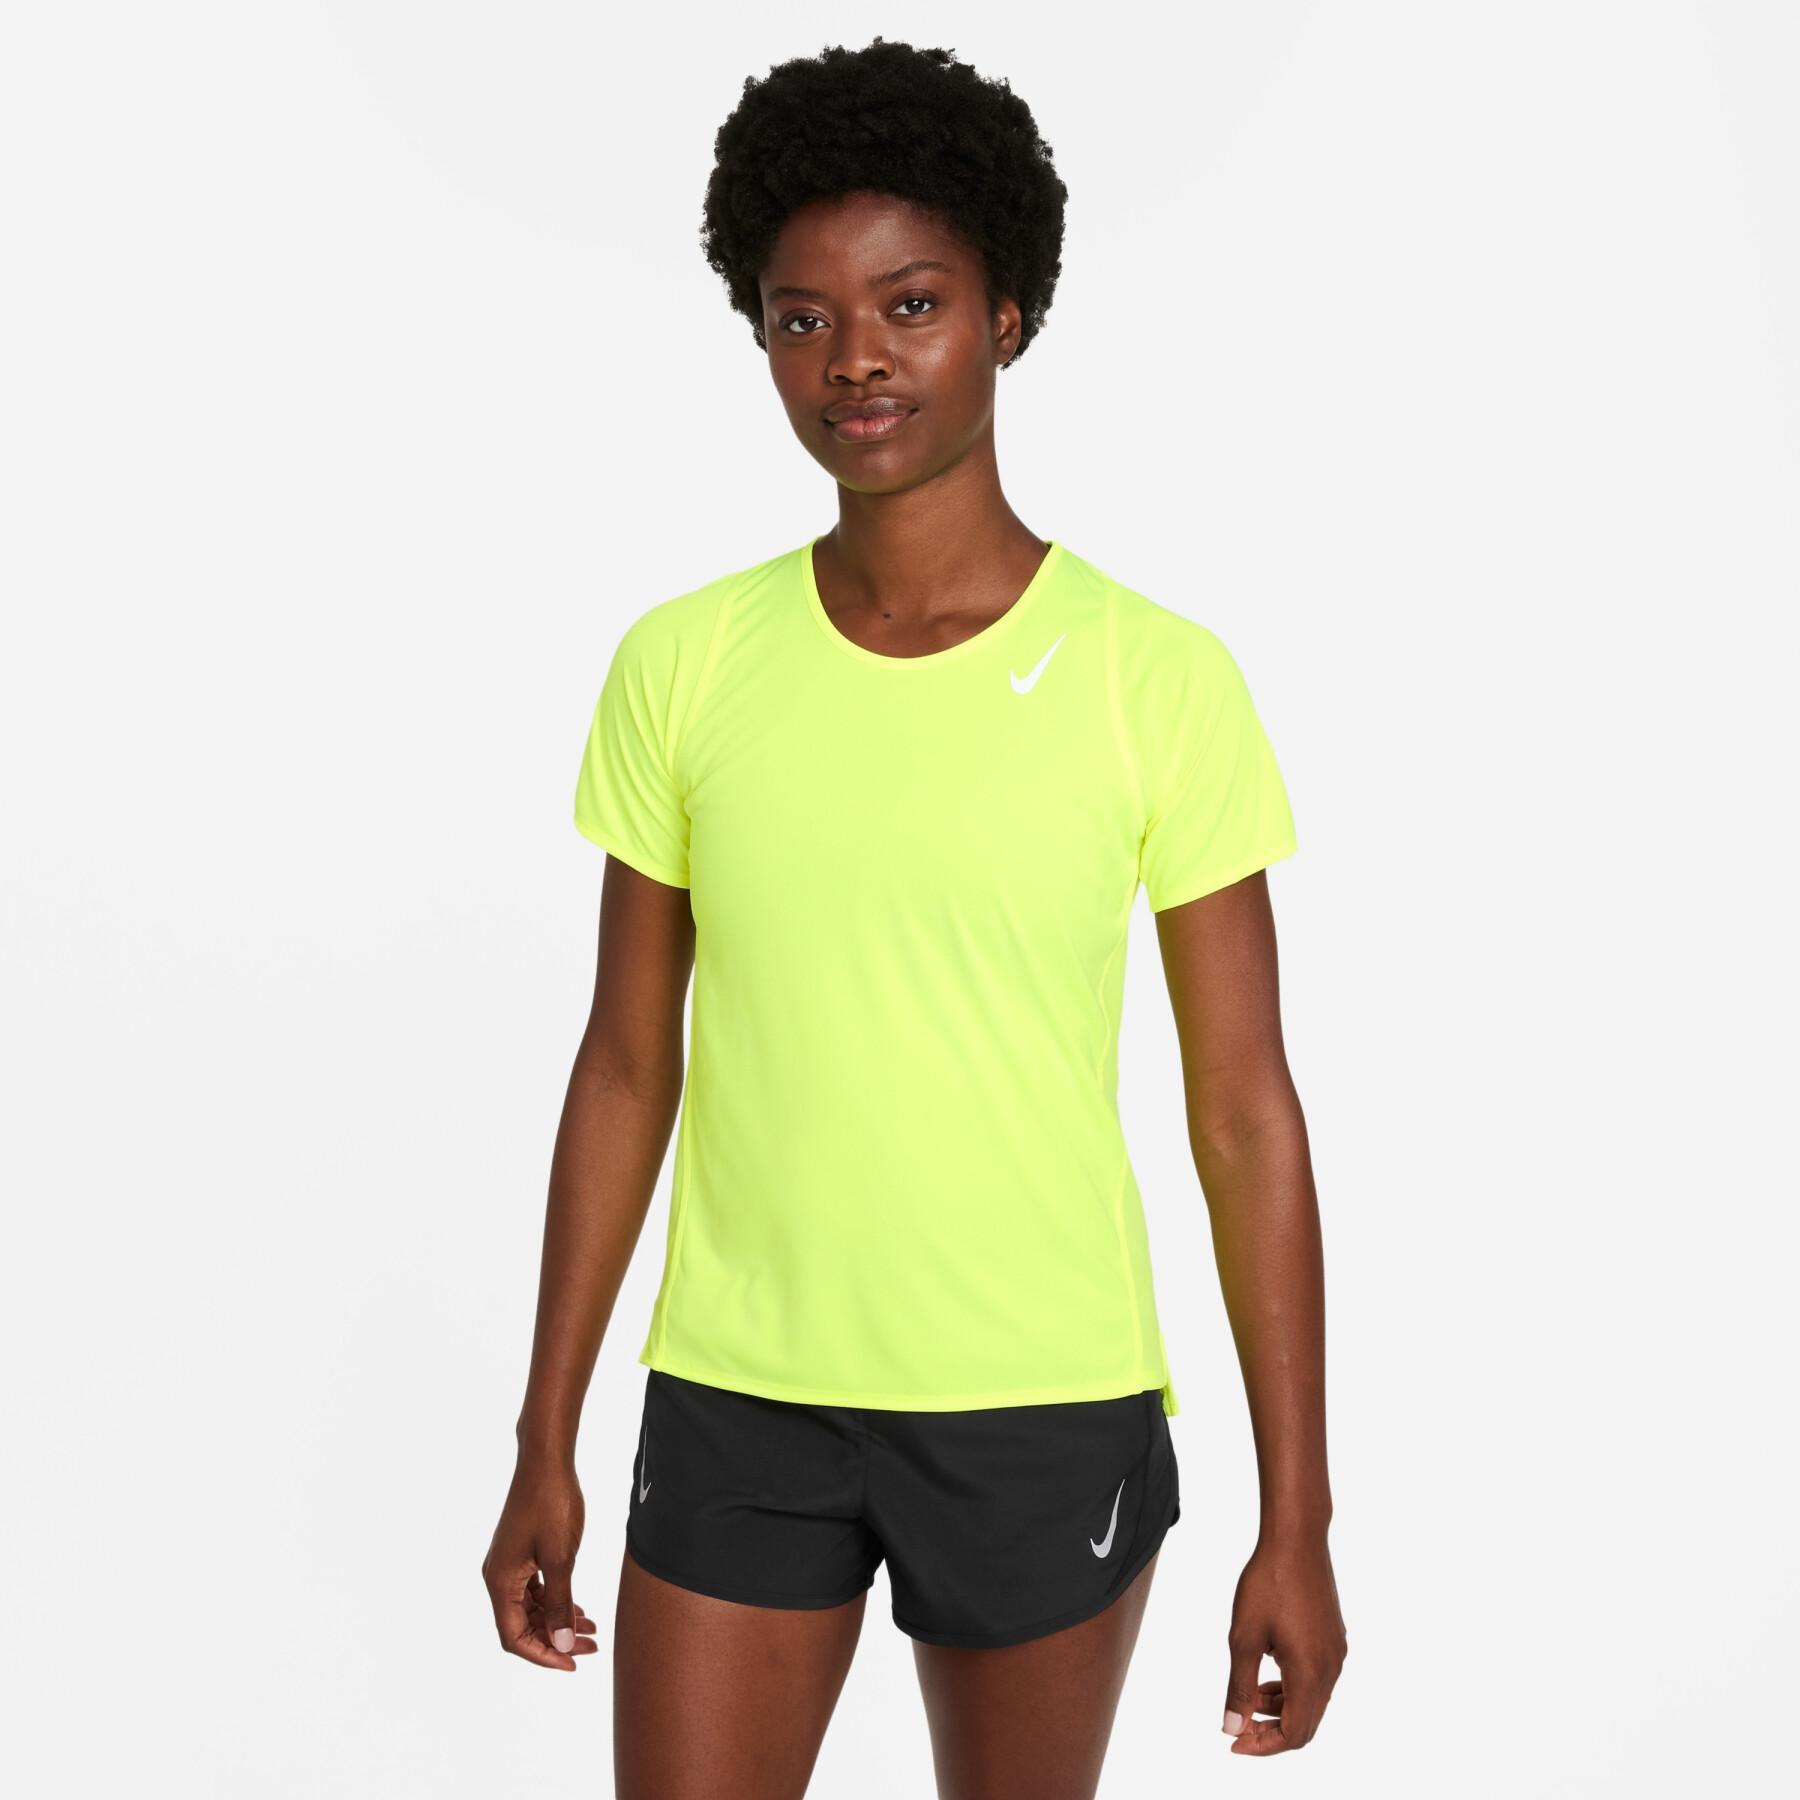 Camiseta feminina Nike dynamic fit race